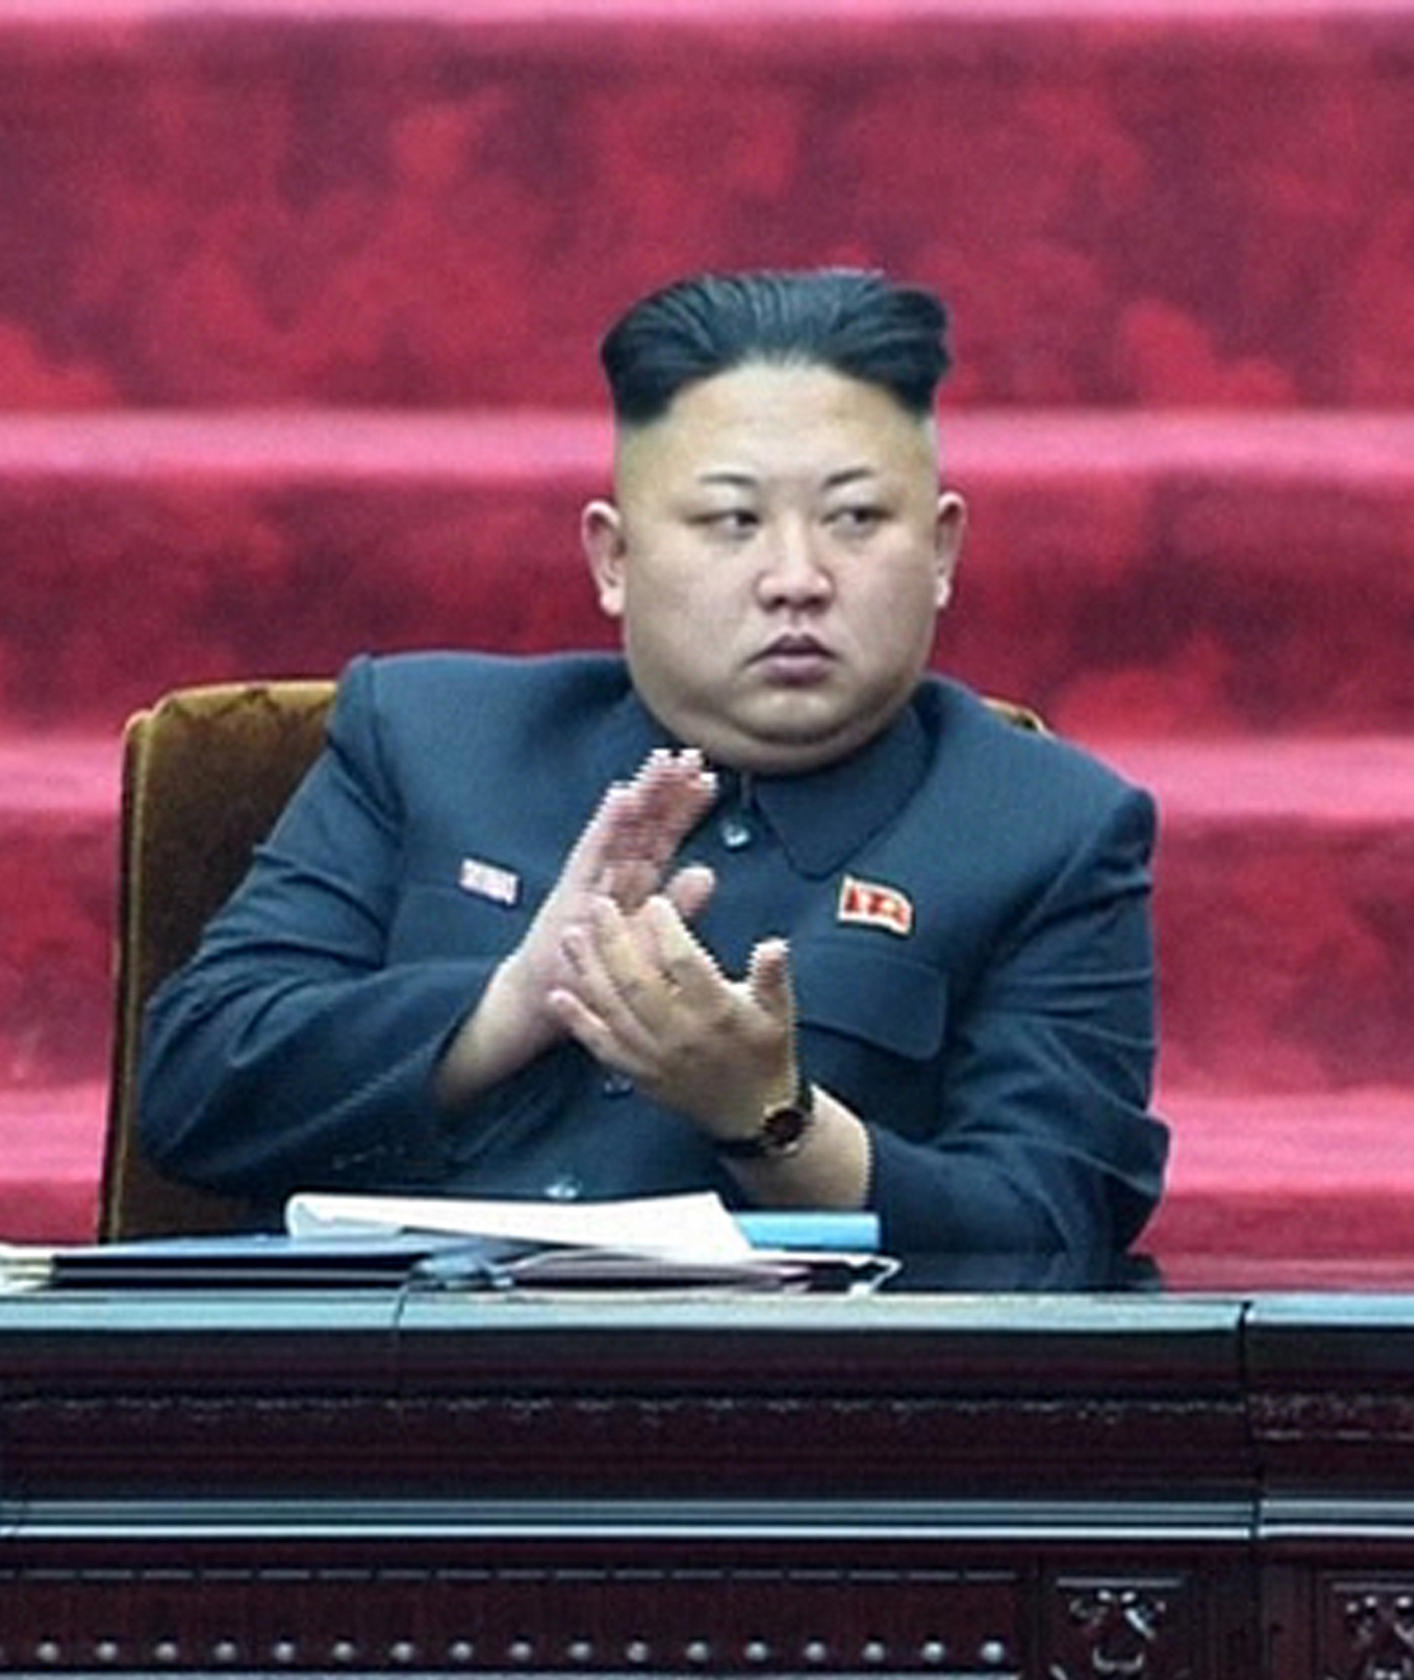 Kim Jong-un compulsory haircut story a baldfaced lie? - CSMonitor.com